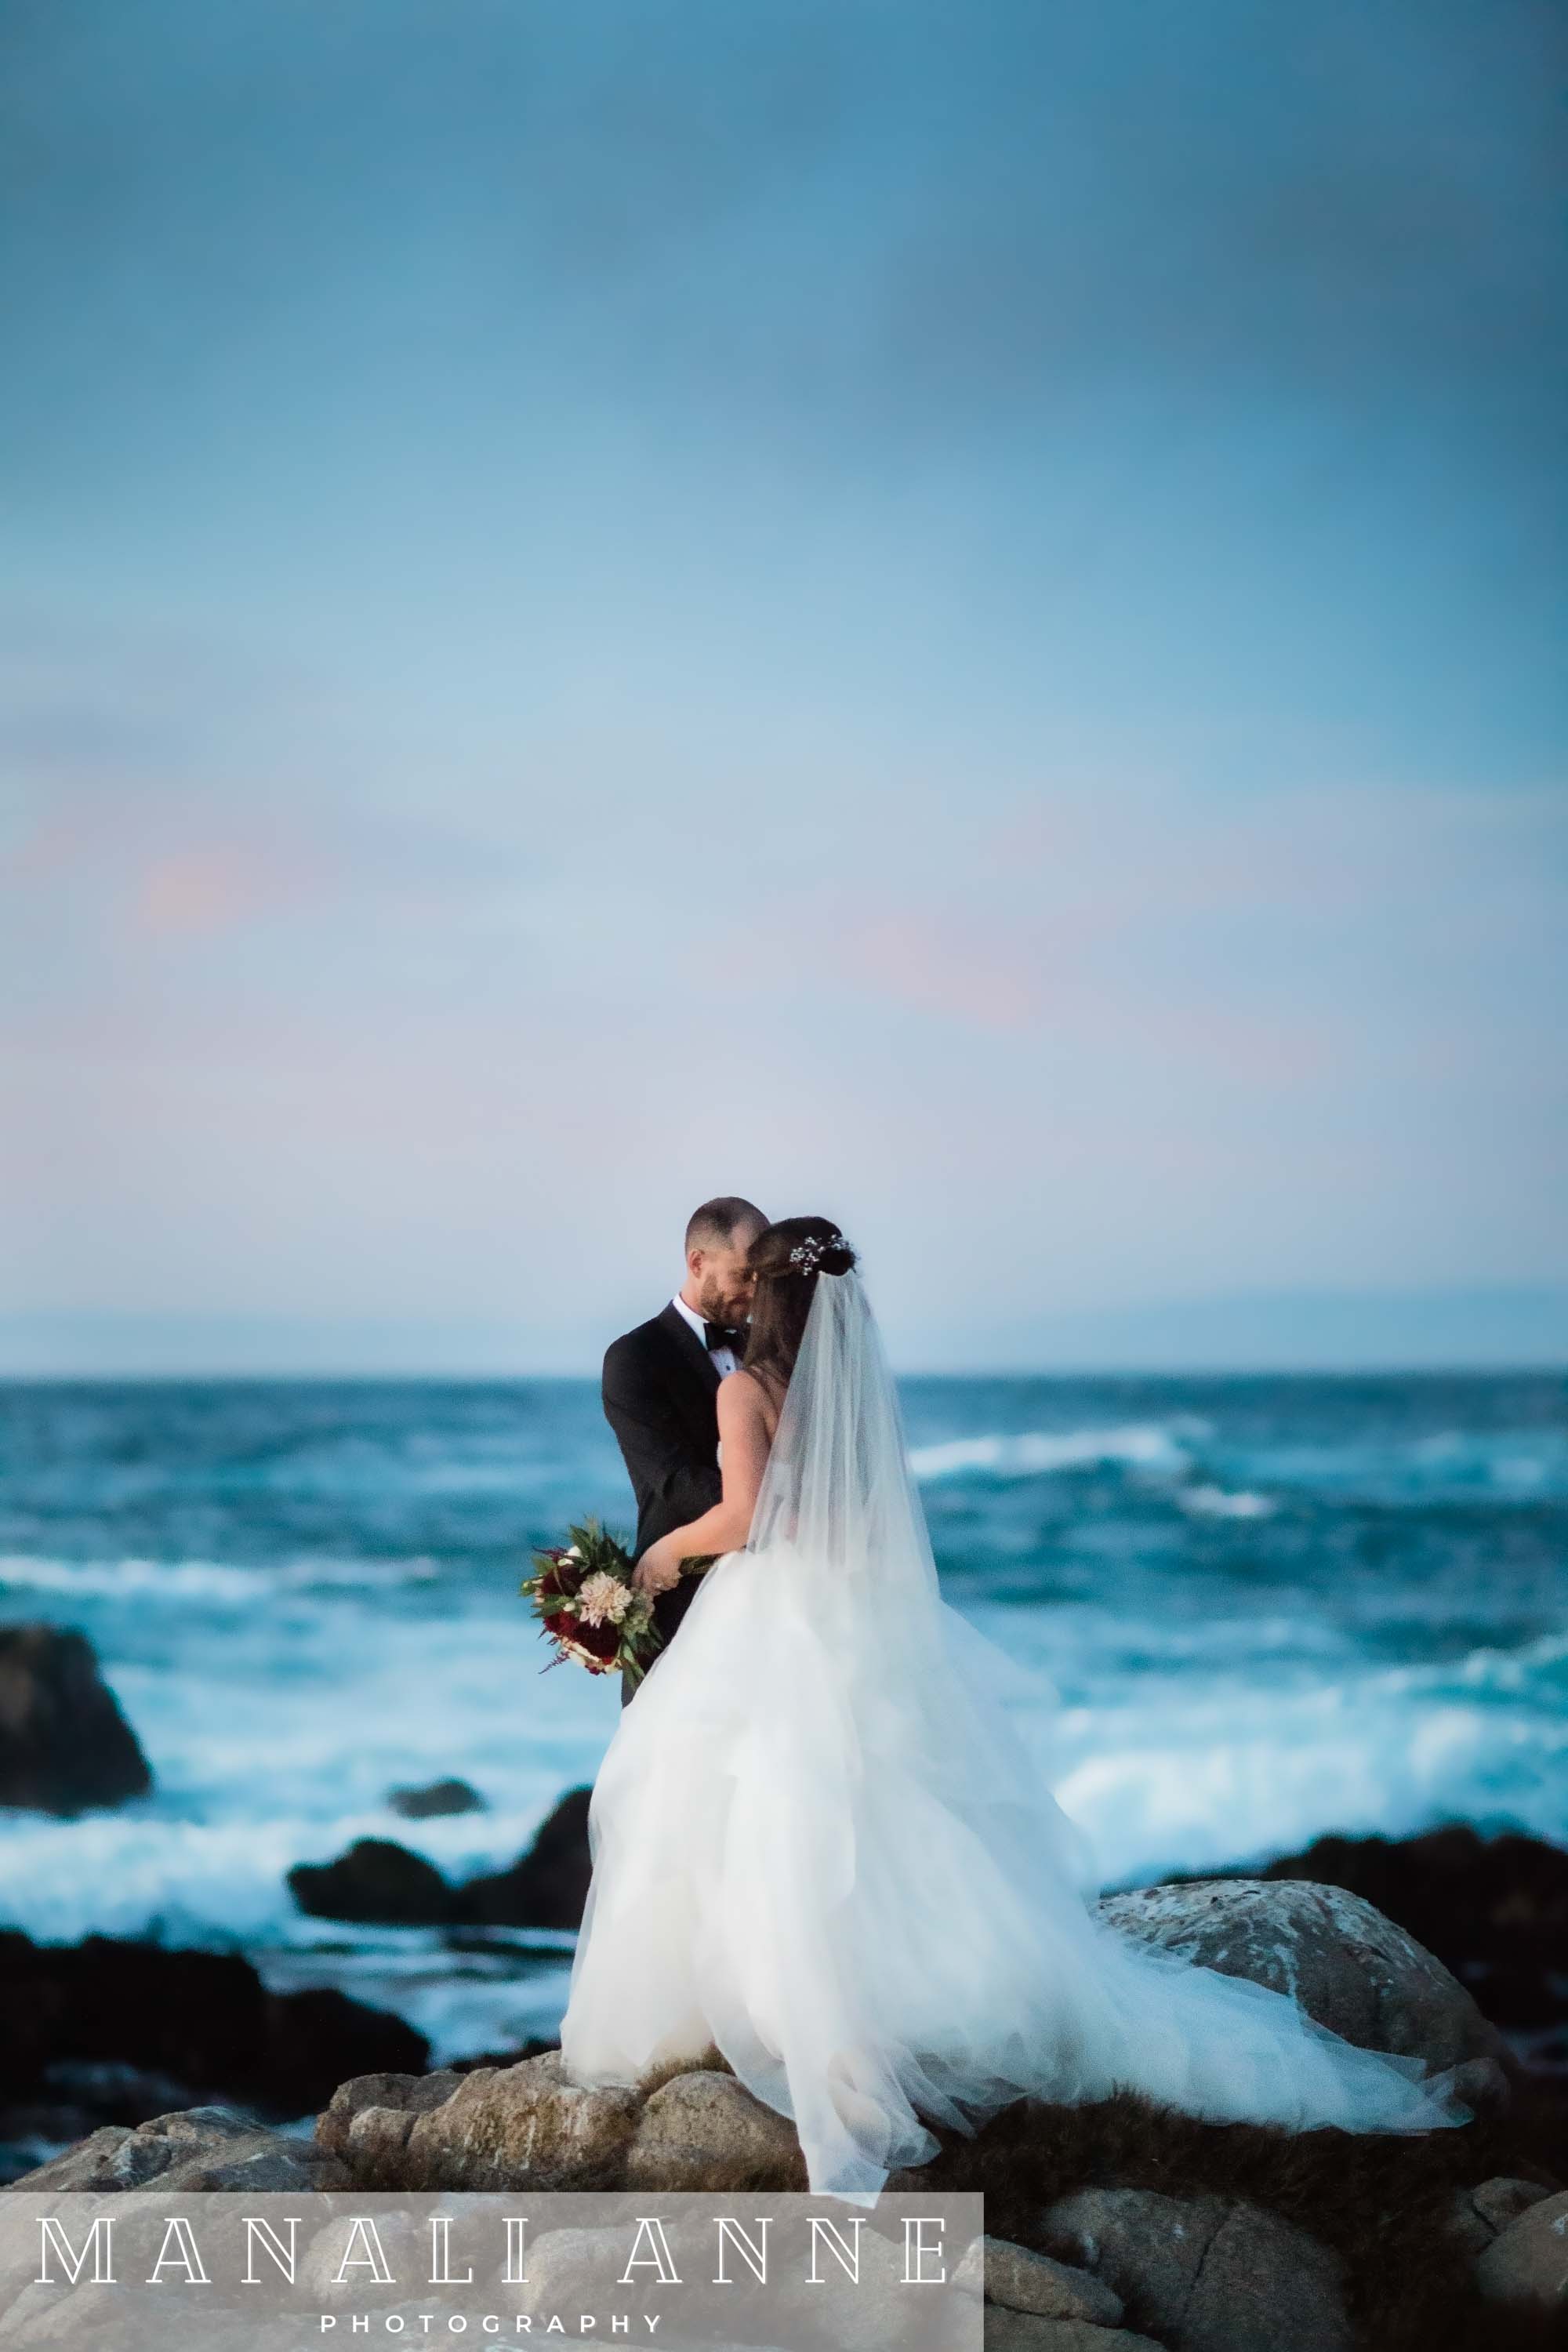 17 Mile Drive Wedding, Hole 14, Monterey Peninsula Country Club, Pebble Beach Beach